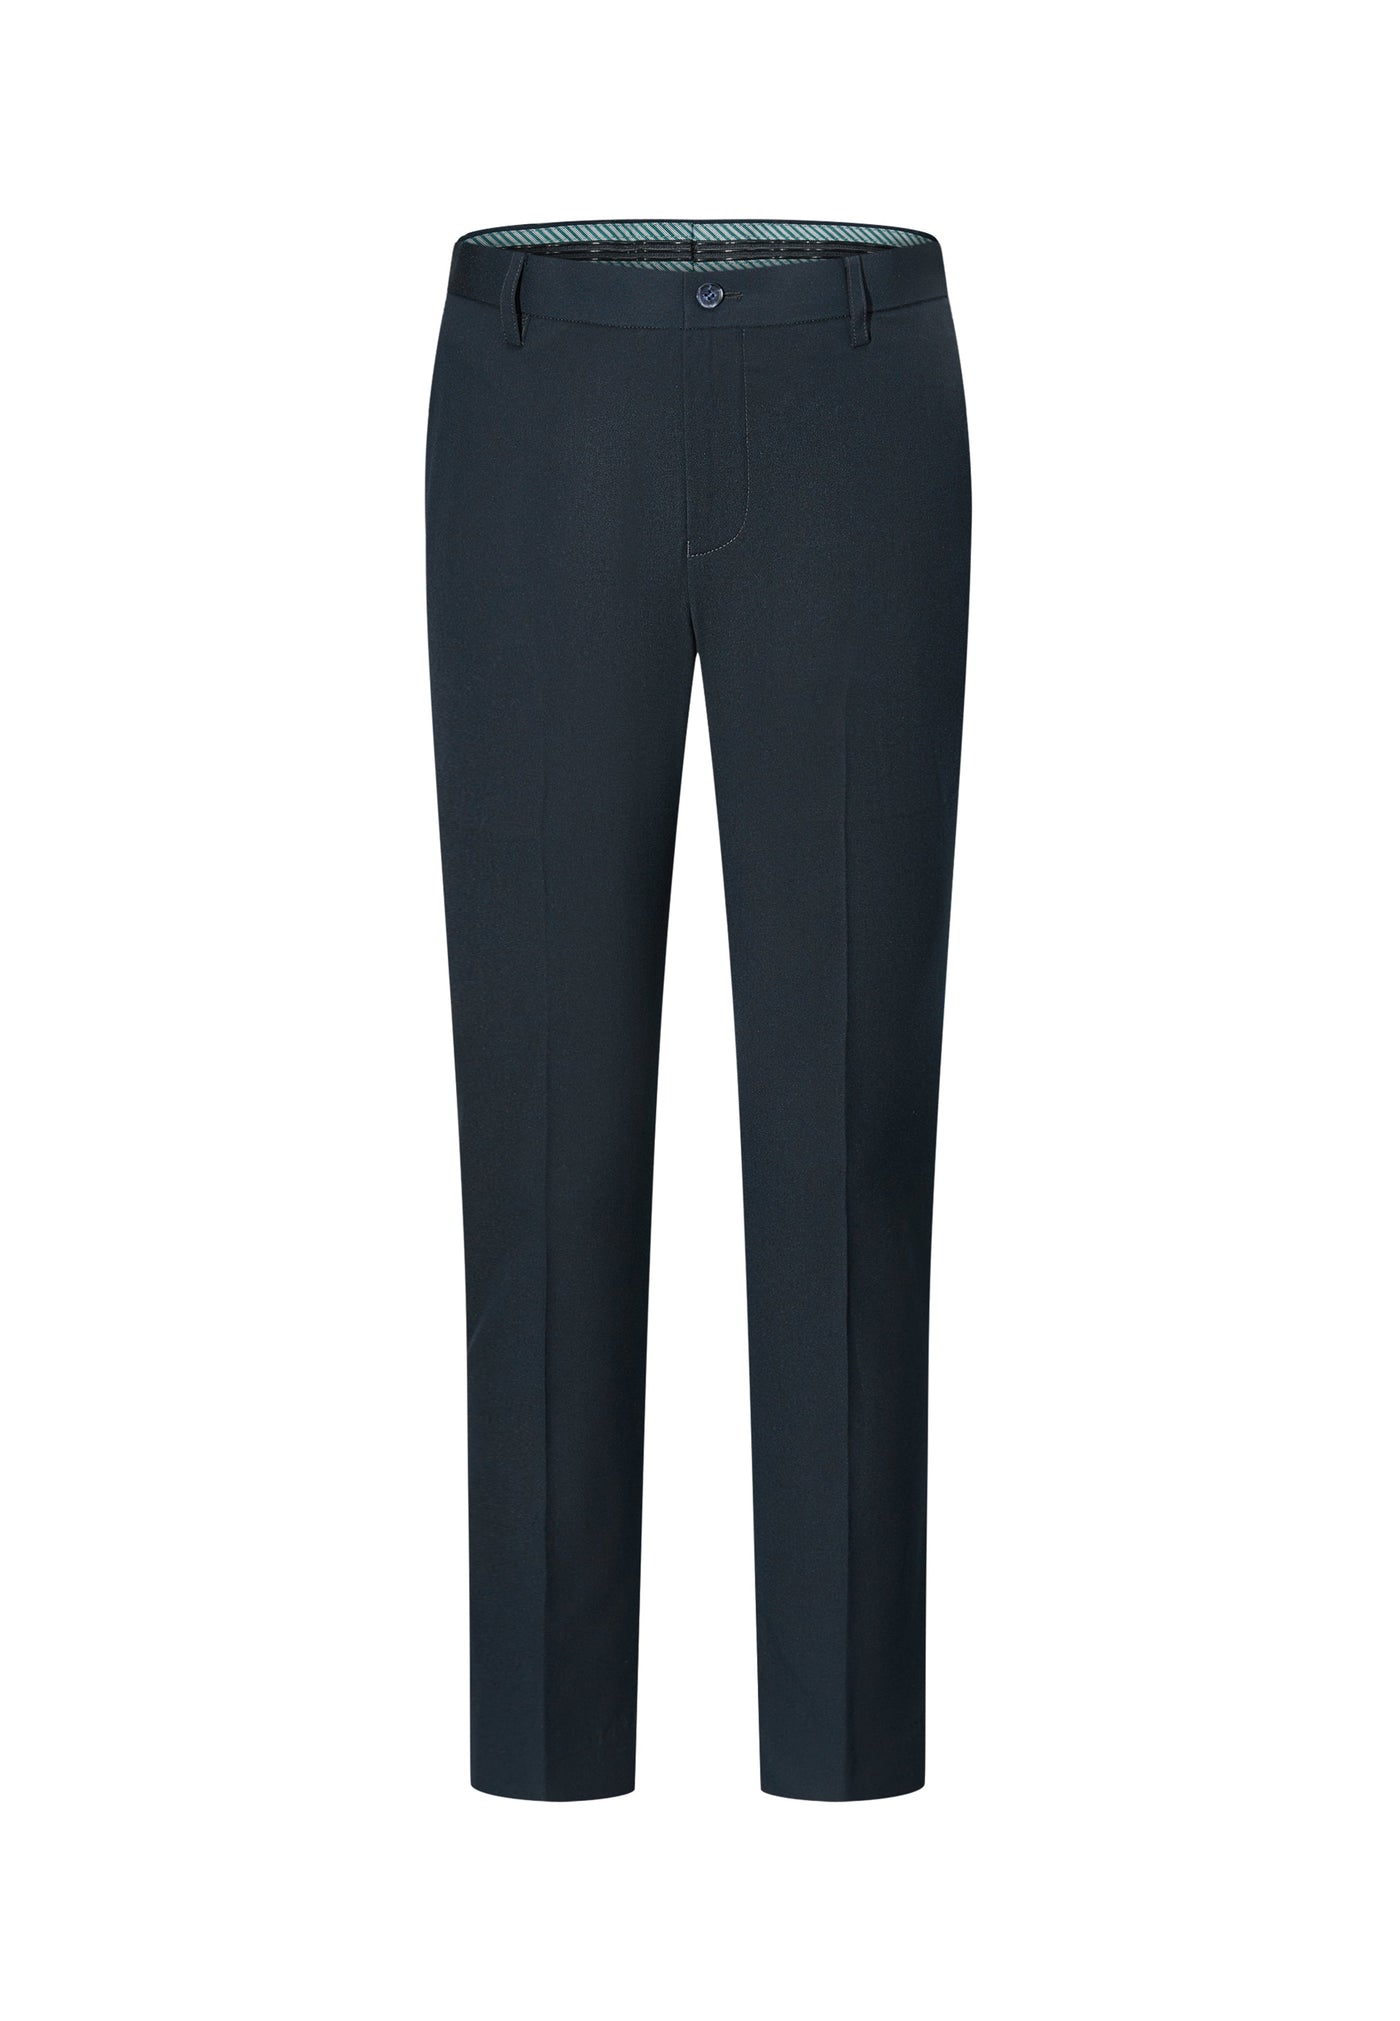 Men Clothing 3M Super Soft Modal Multi-Way Stretch Formal Pants Smart Fit